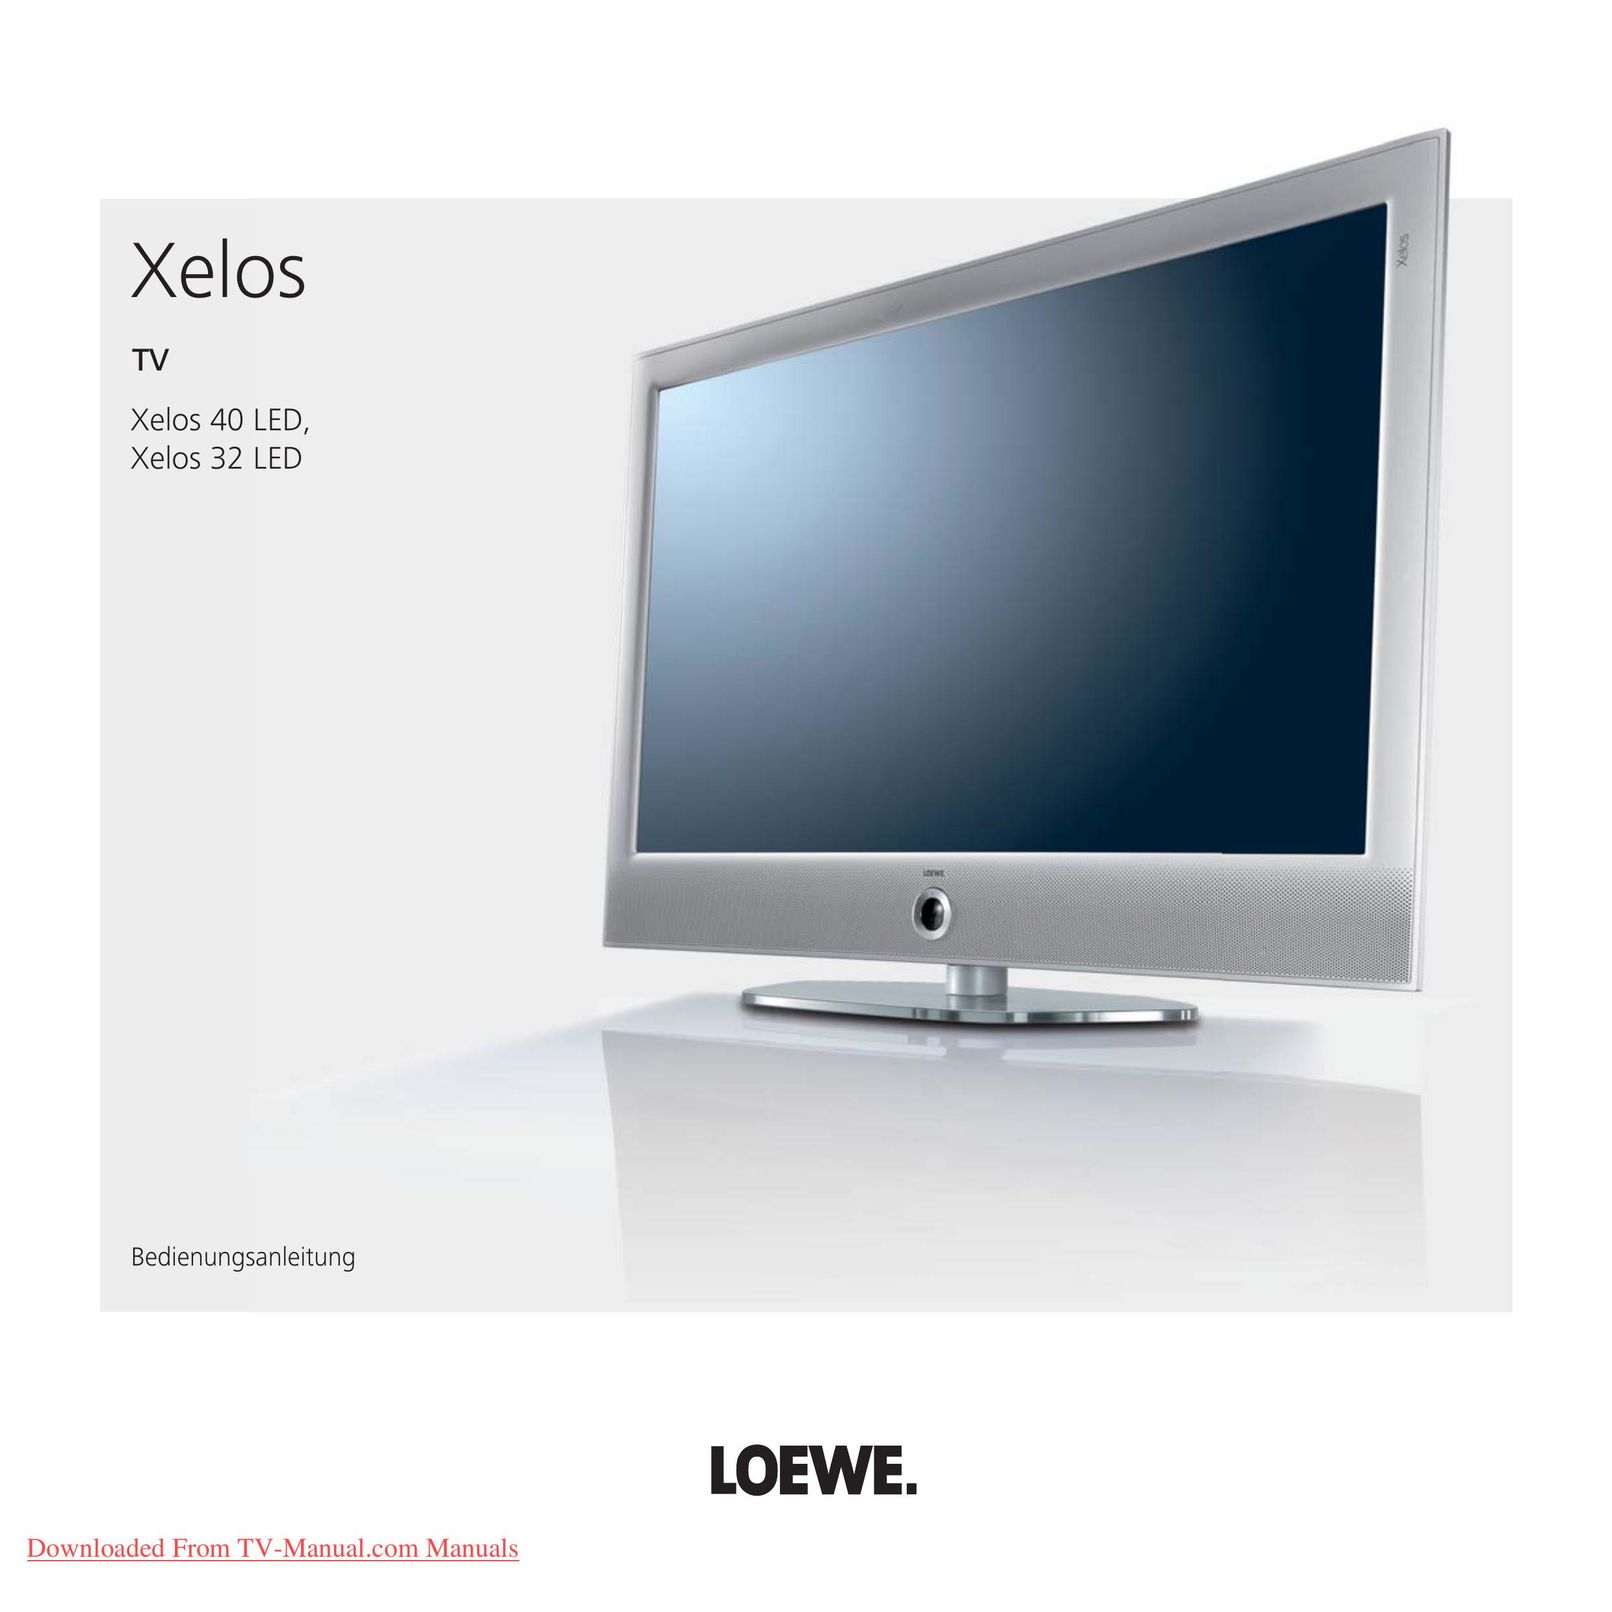 Loewe Xelos 32 LED Work Light User Manual